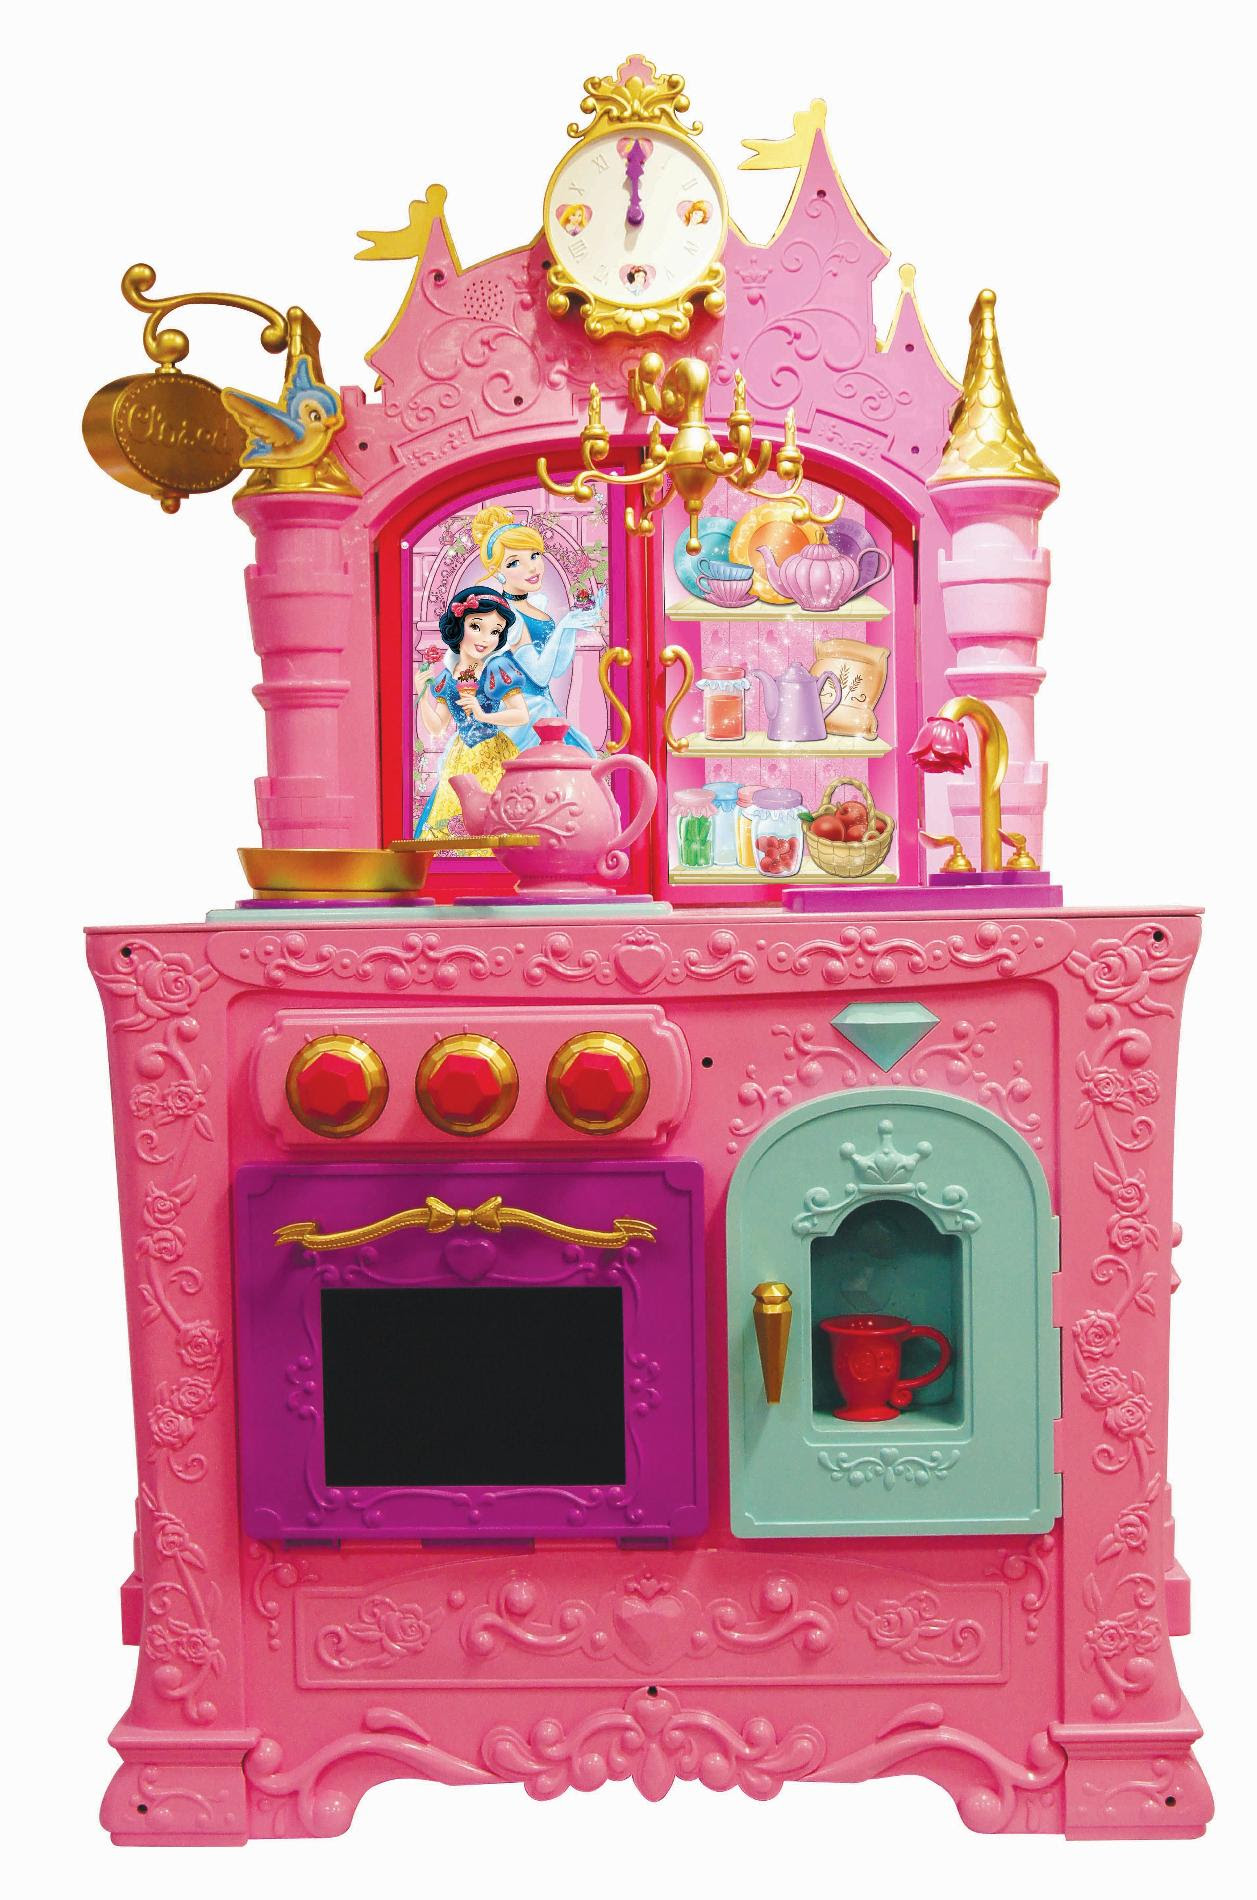 Princess Play Kitchen Interior Design